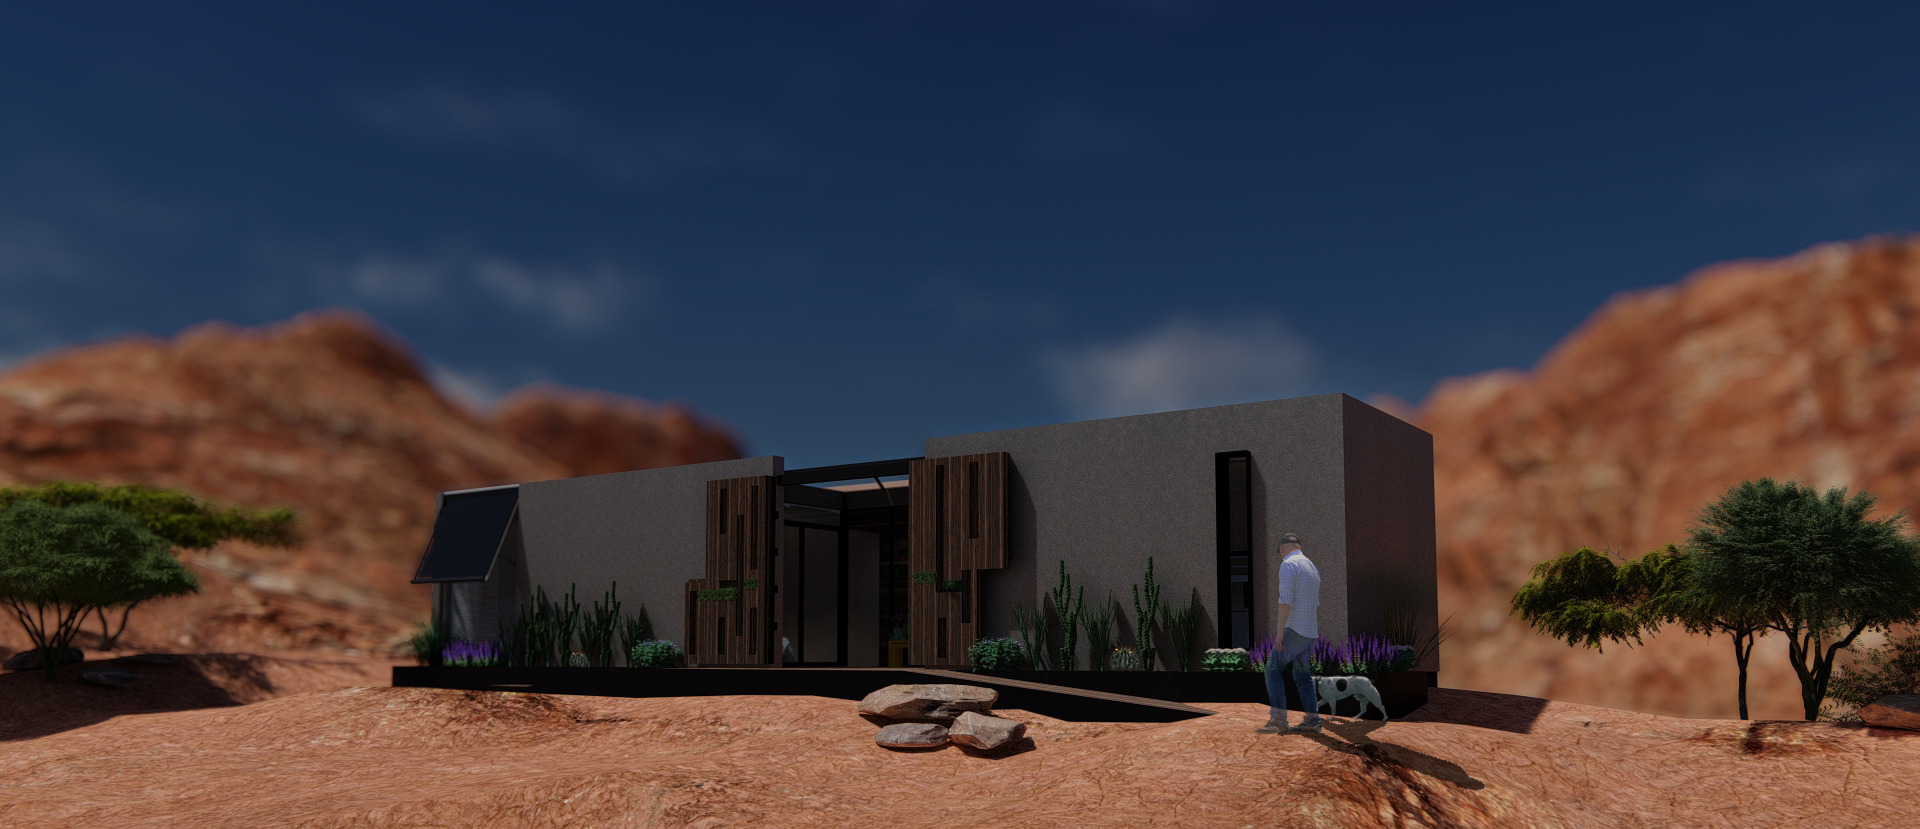 Model of home by University of Nevada, Las Vegas.